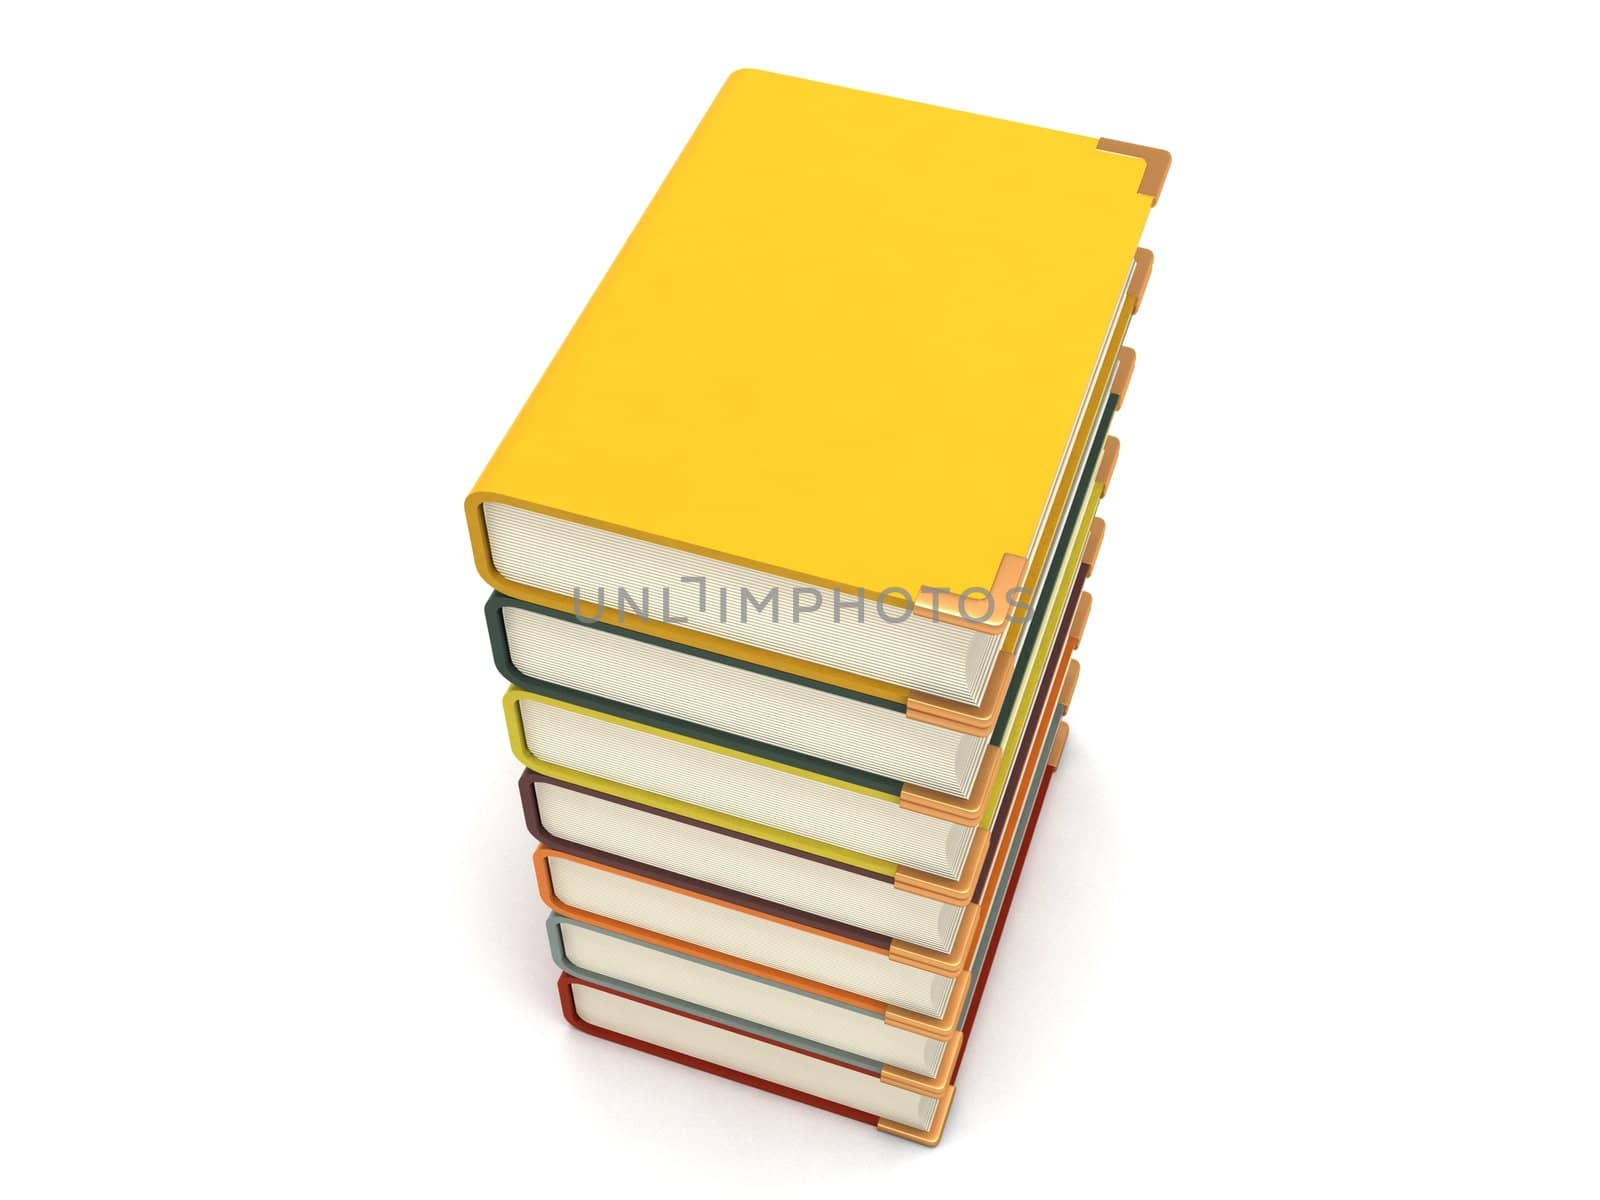 three dimensional pileup books by imagerymajestic